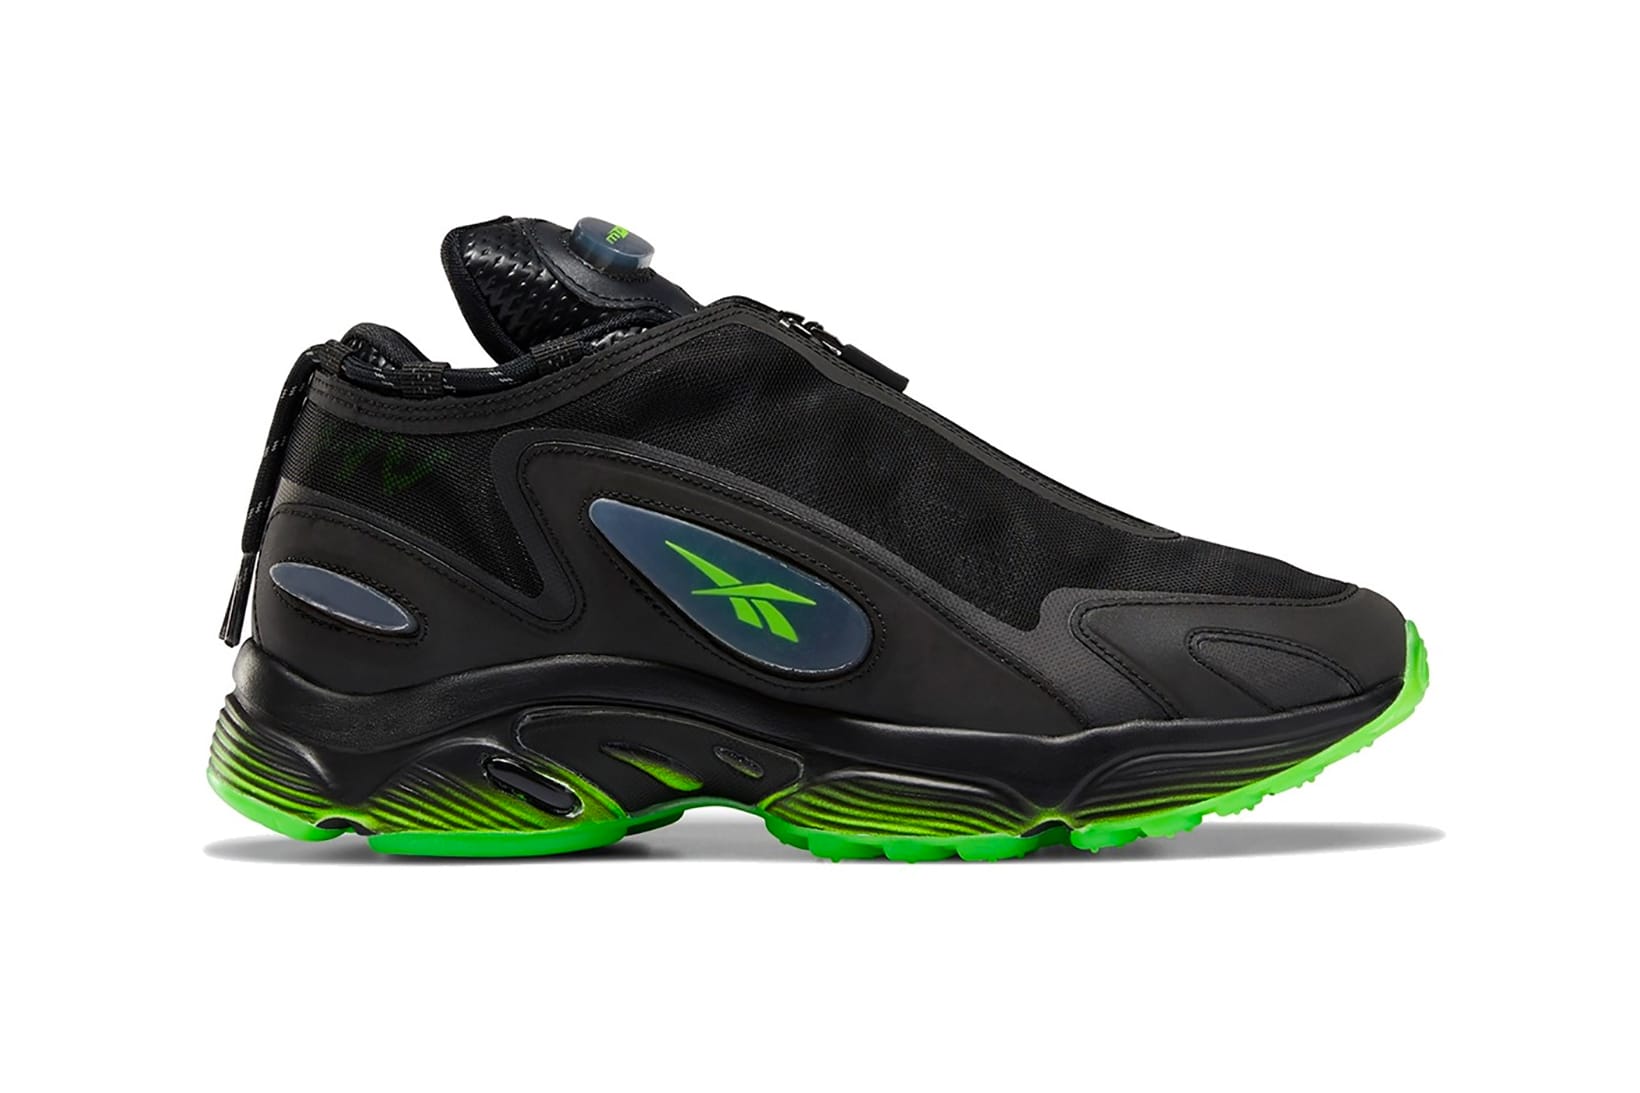 neon green reebok sneakers